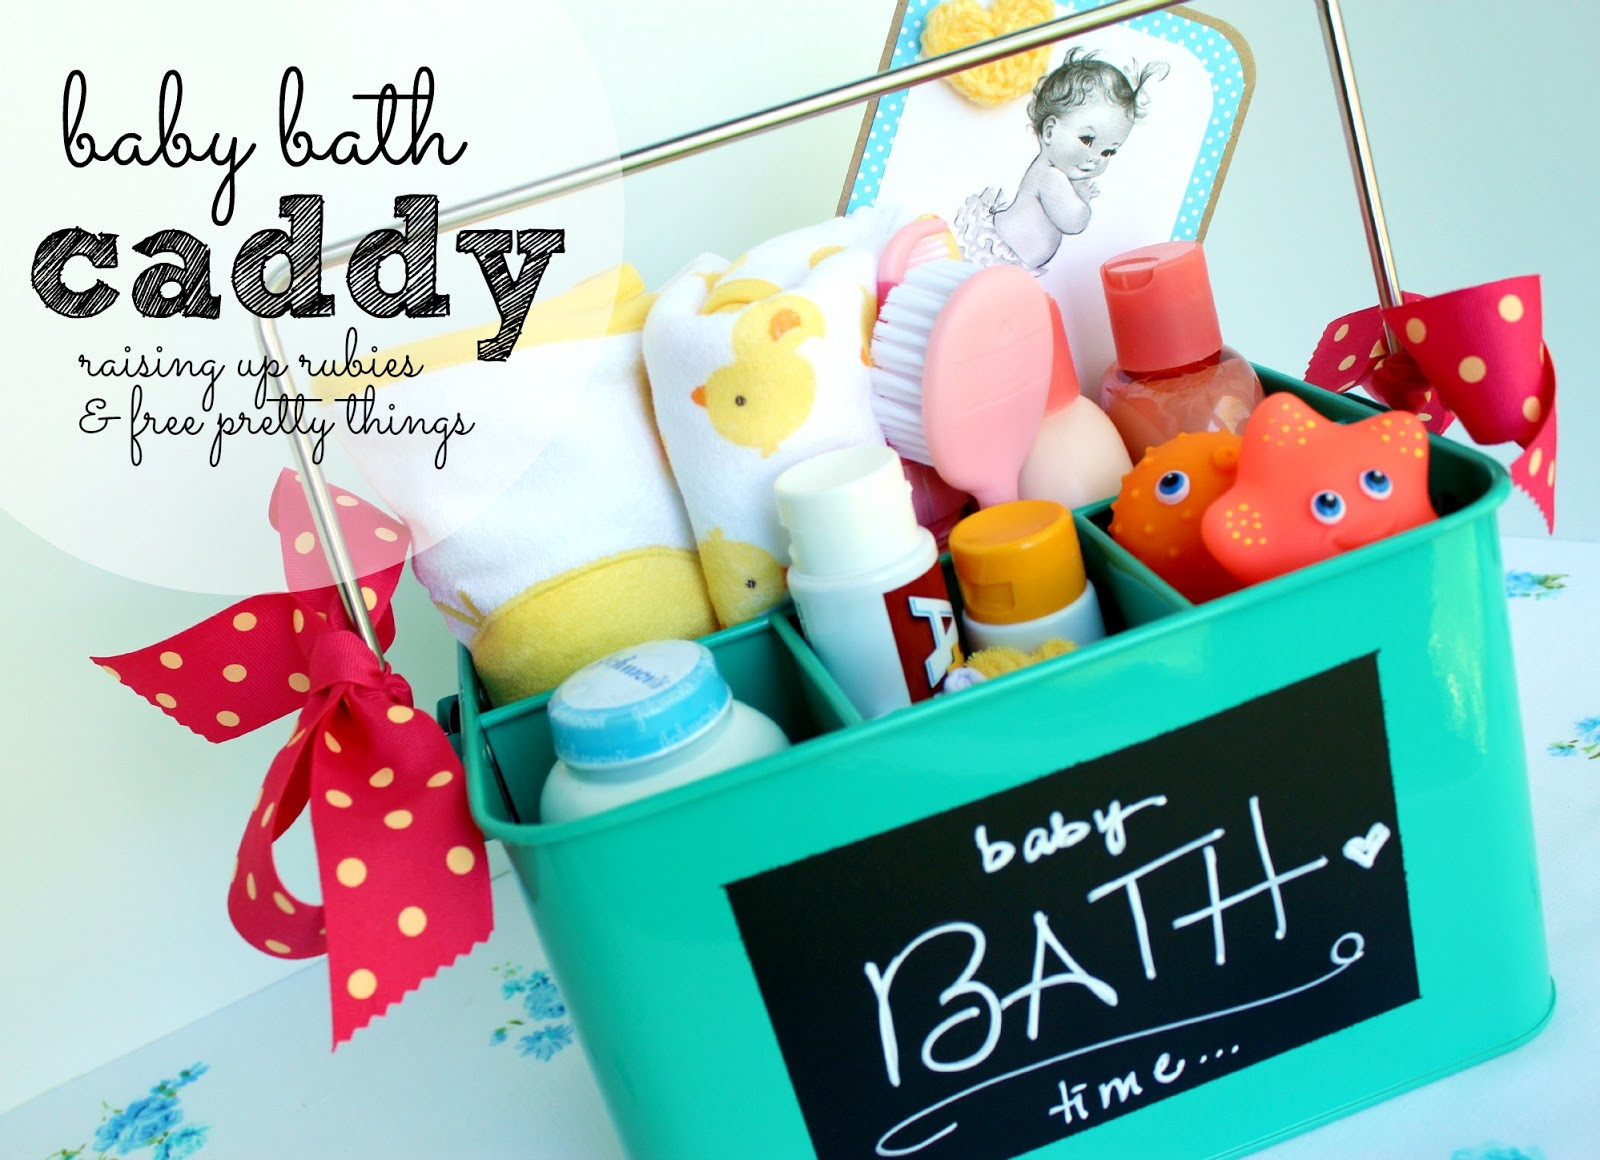 Baby Bath Gift Ideas
 Raising Up Rubies Blog baby t idea ♥ bath time caddy